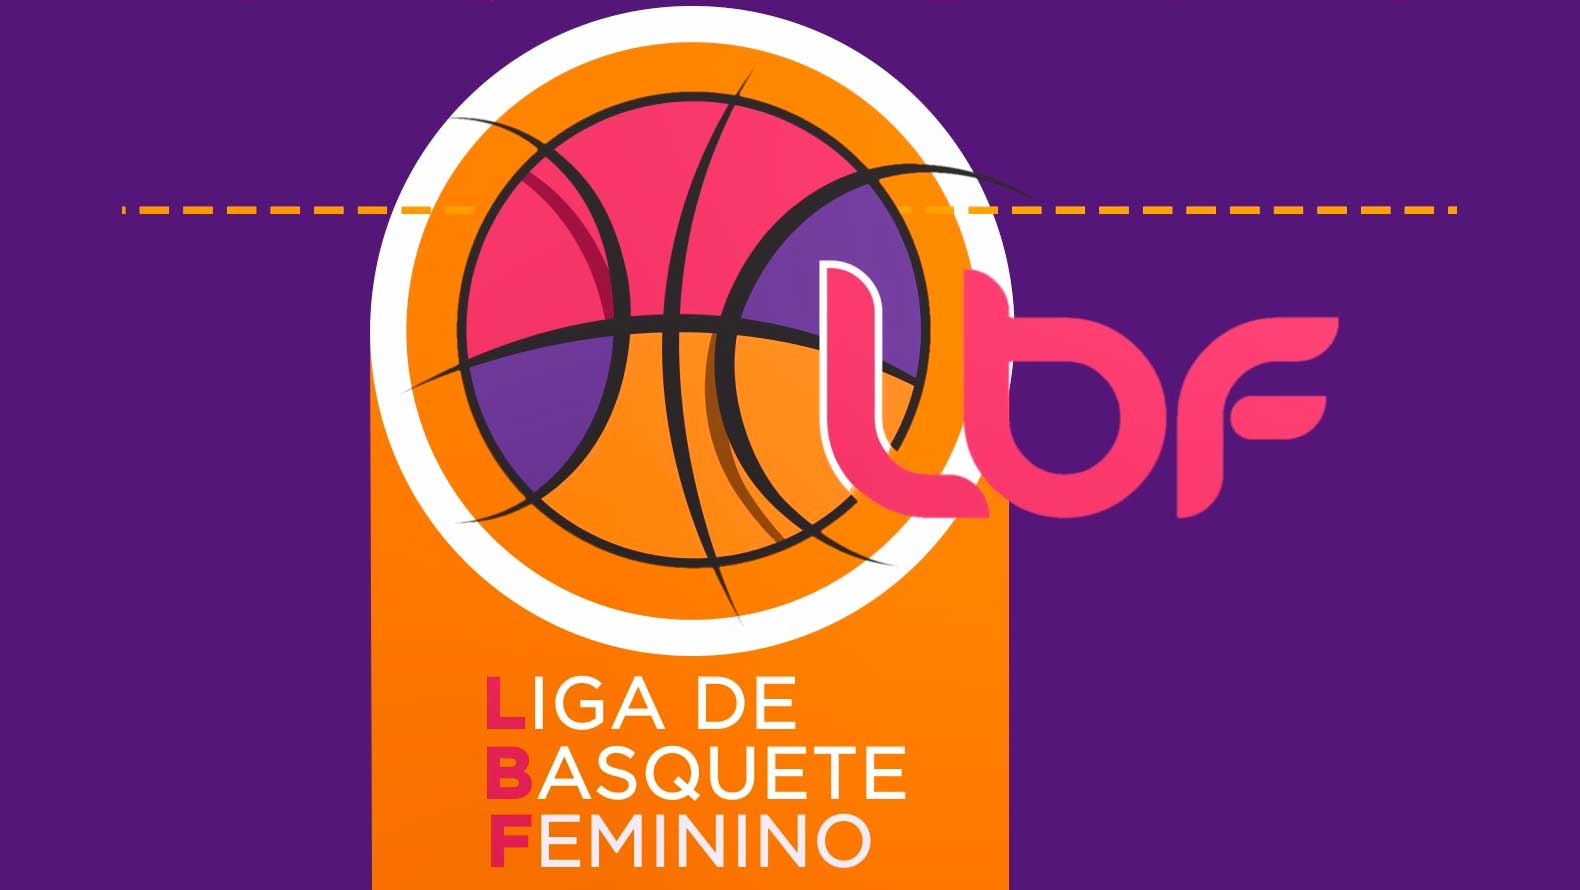 LBF - Liga de Basquete Feminino